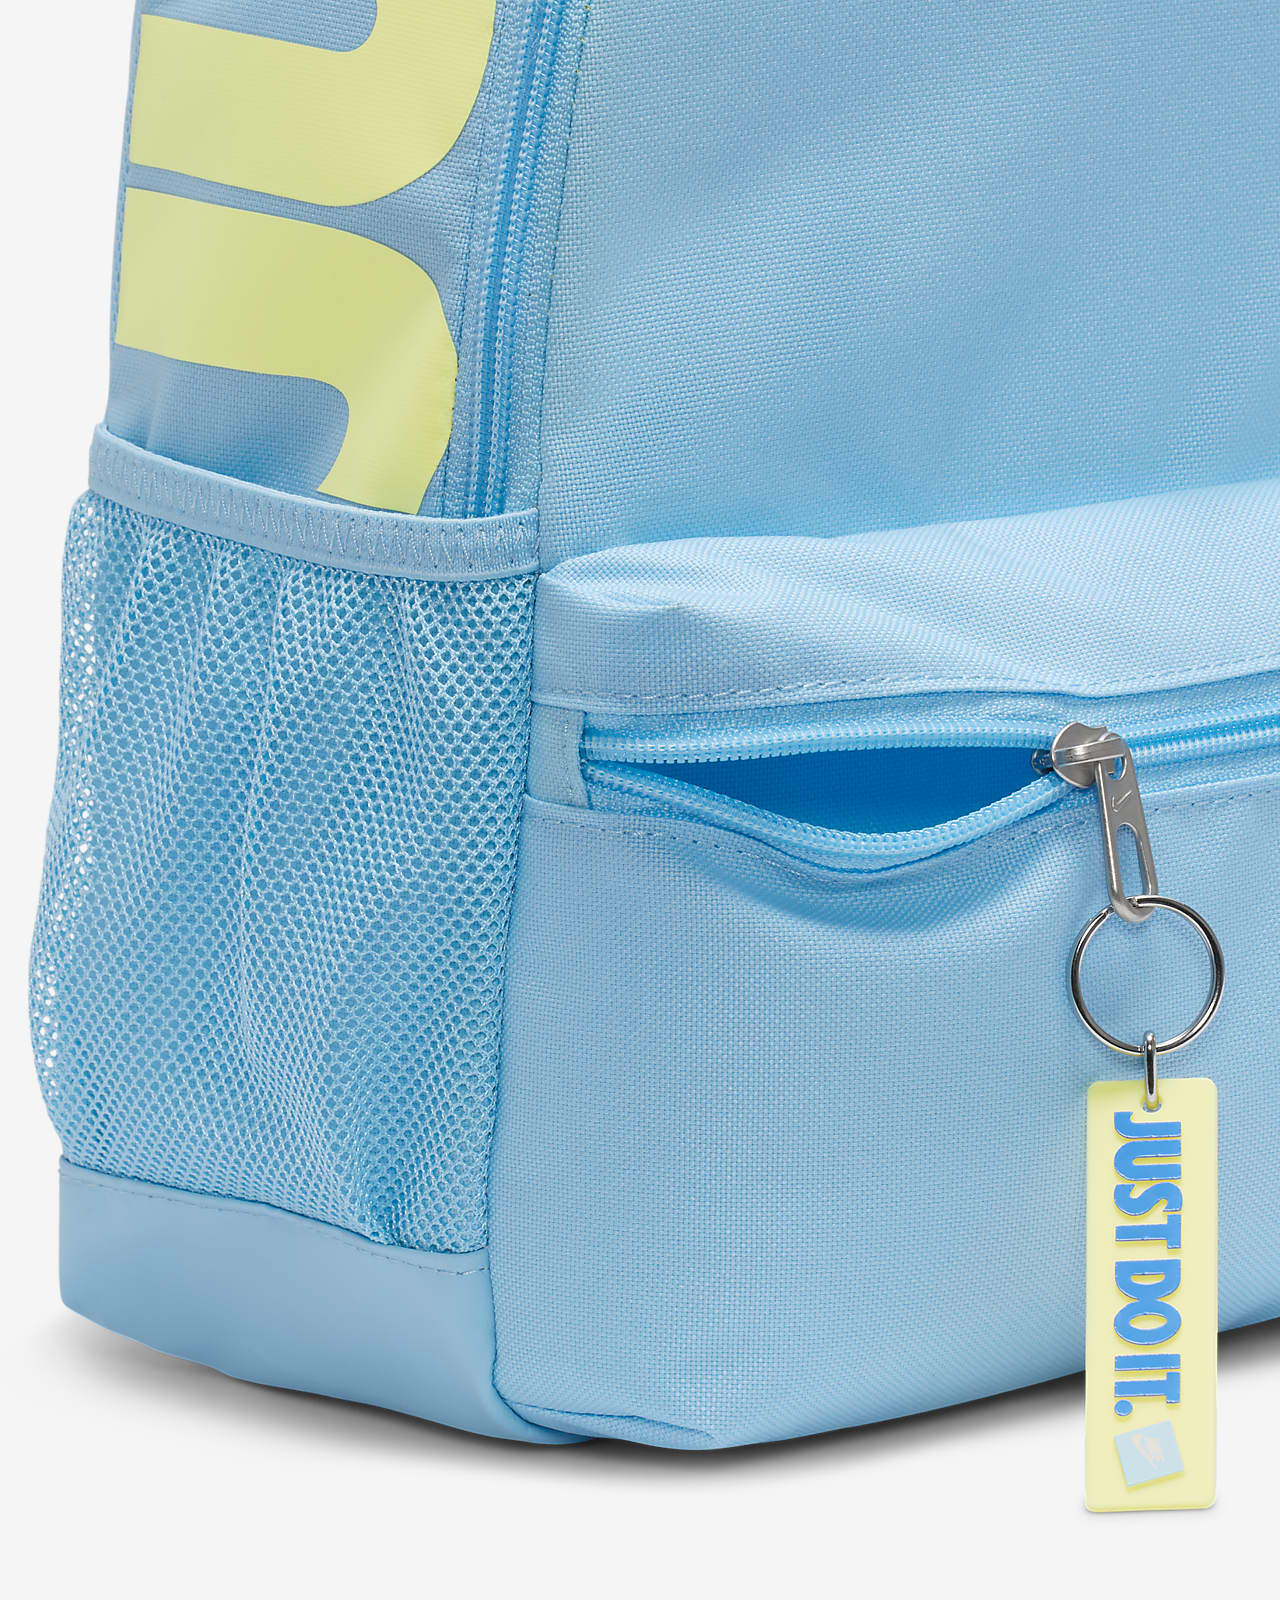 Nike Brasilia JDI Kids' Backpack (Mini) Navy Blue